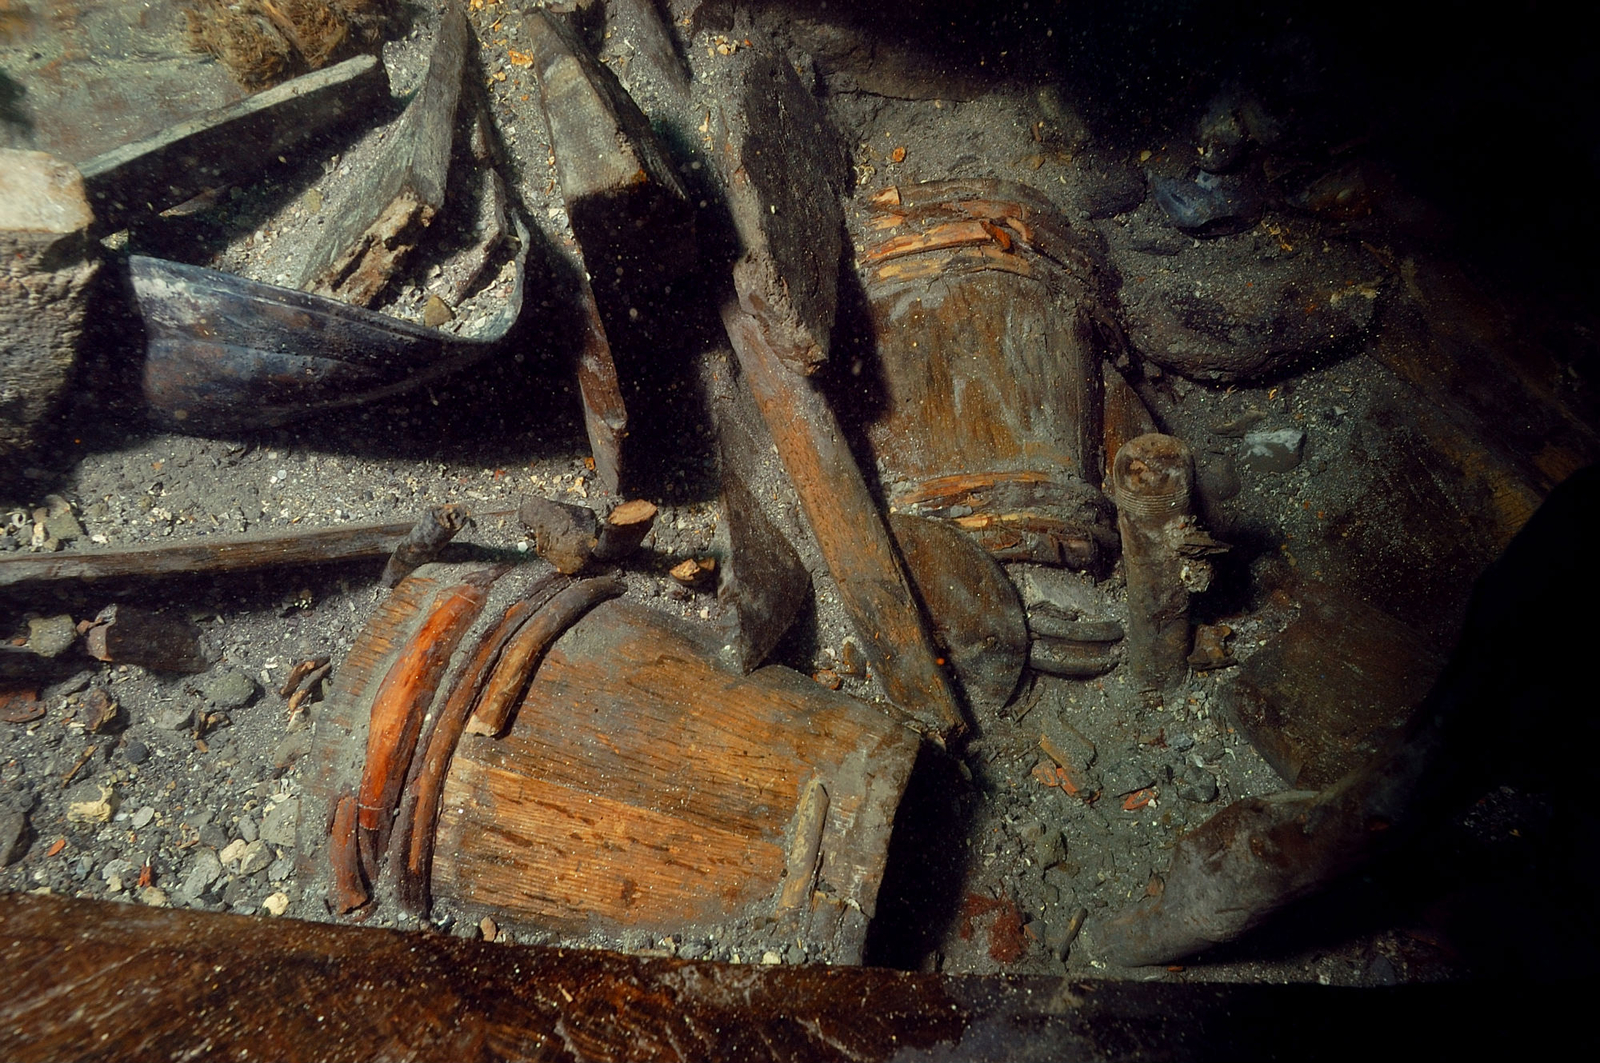 Vue sous-marine d'objets in situ